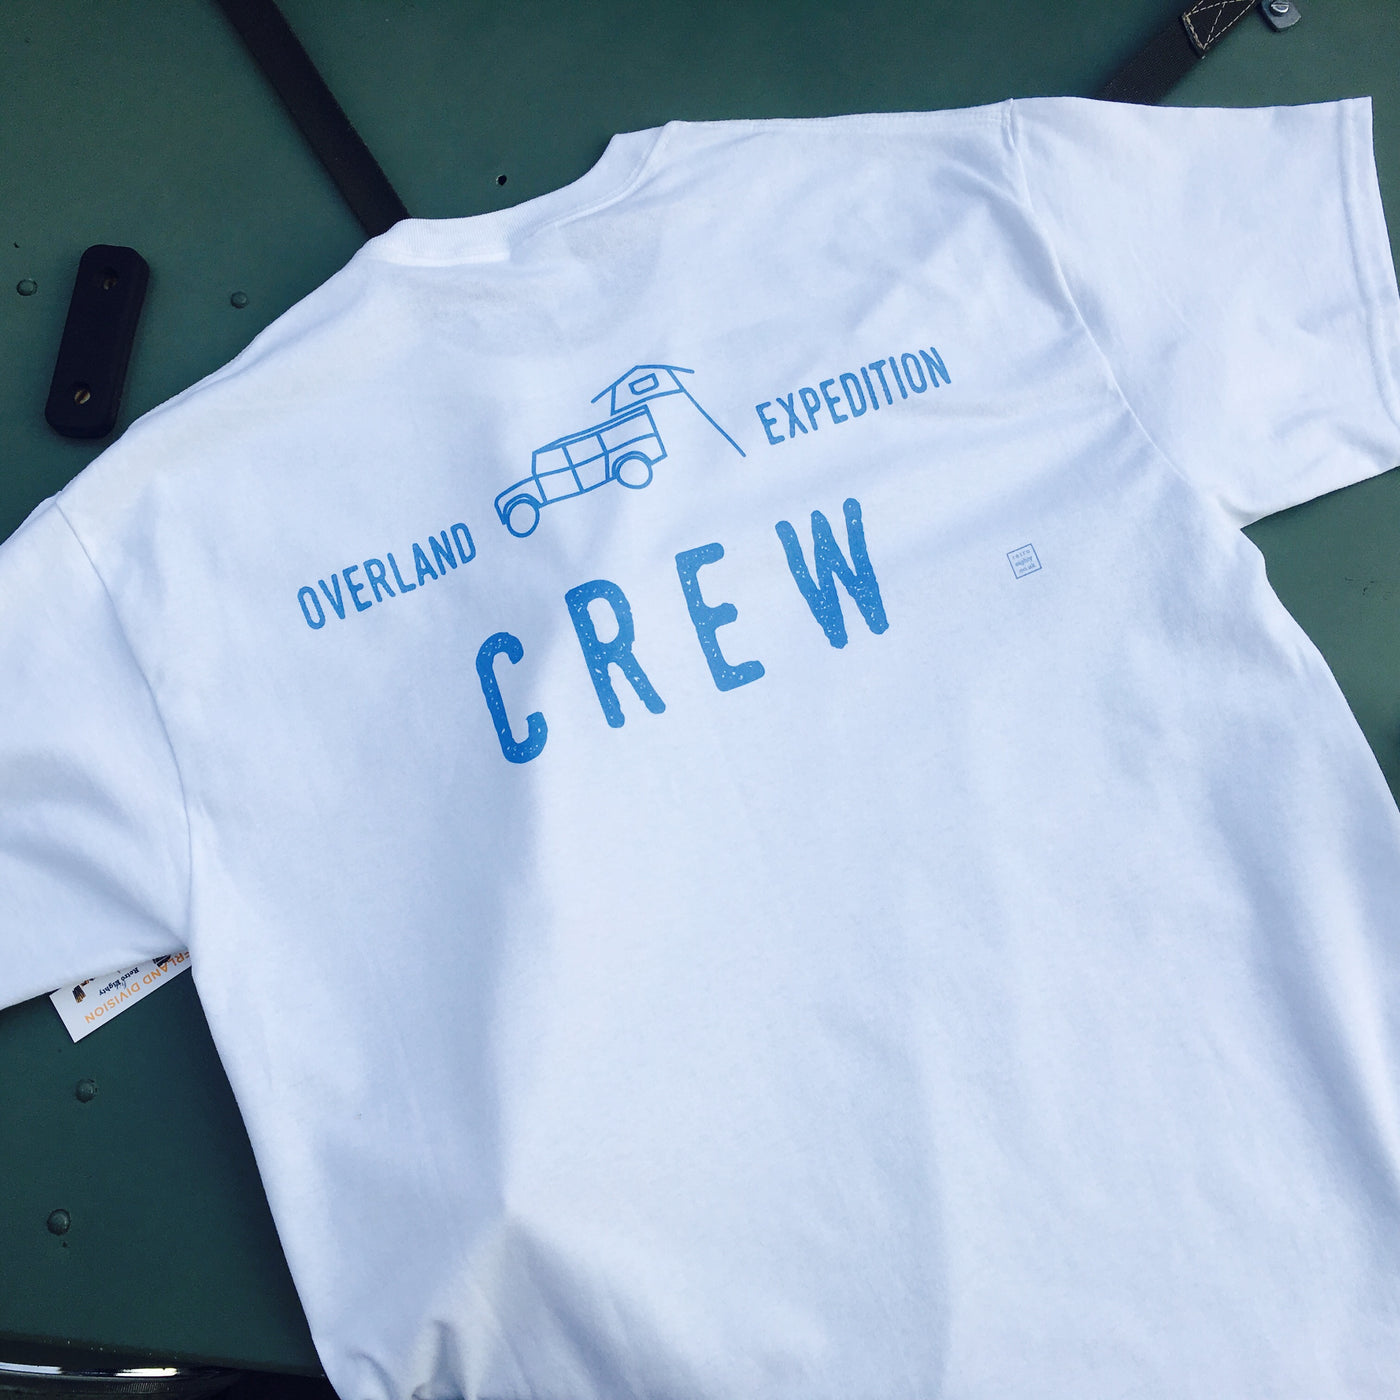 'Overland Expedition Crew' t-shirt - Gildan white